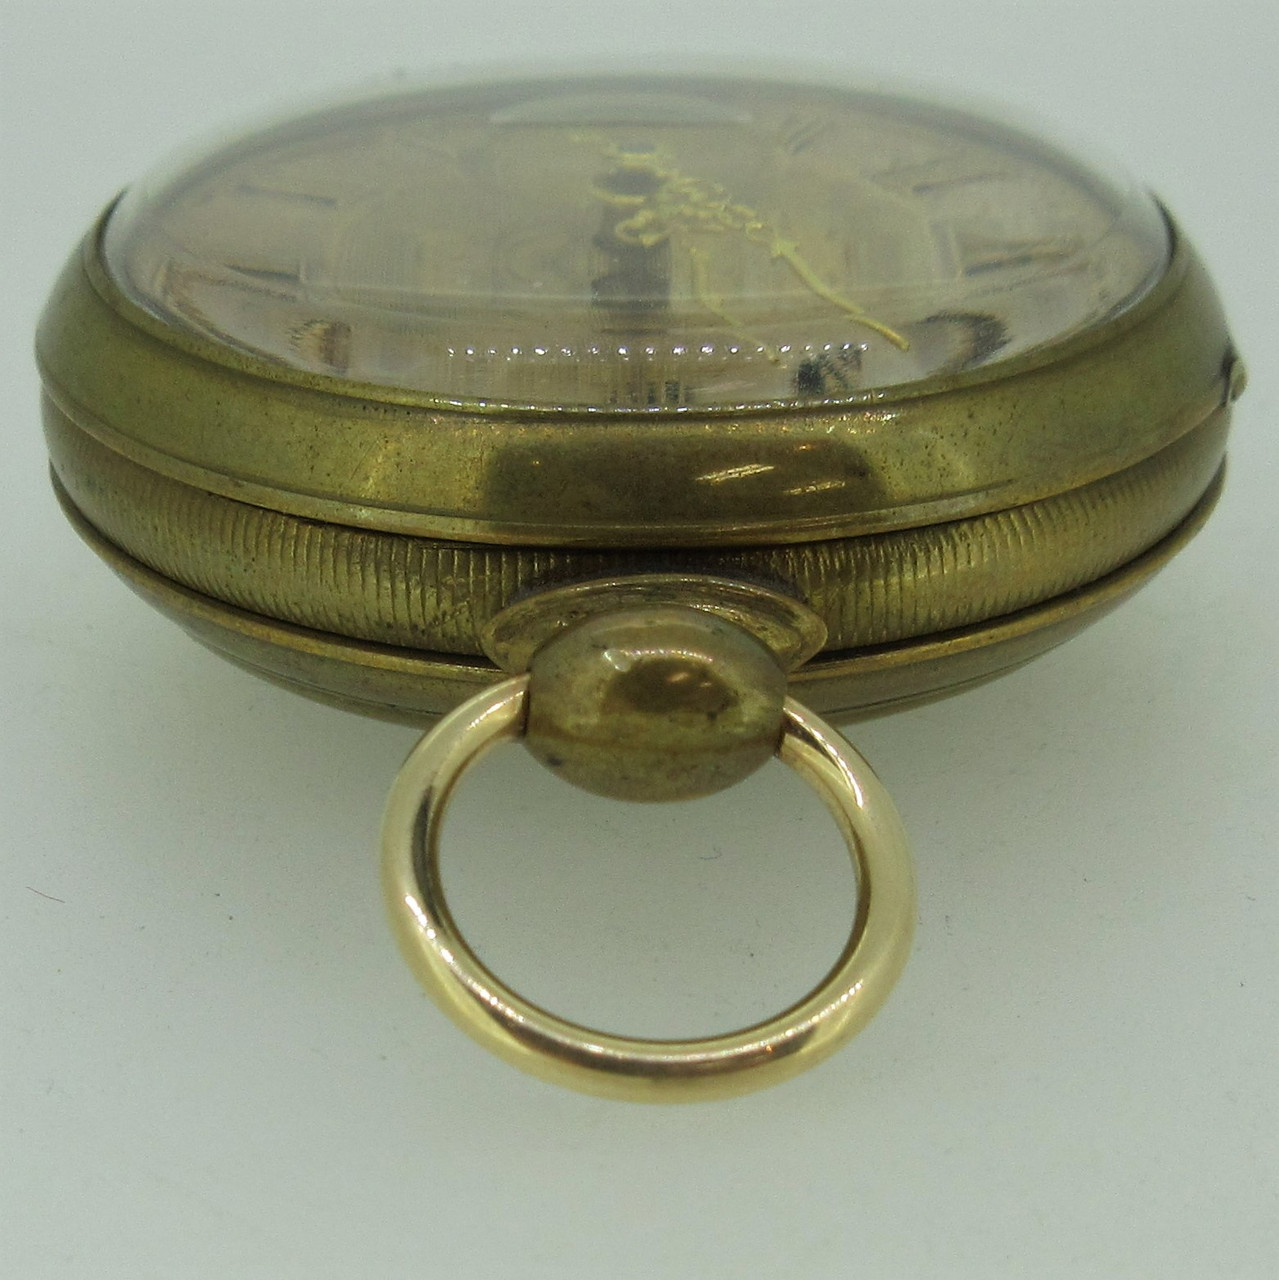 Antique Tavannes Swiss 12s 15J 14k White Gold Filled Pocket Watch